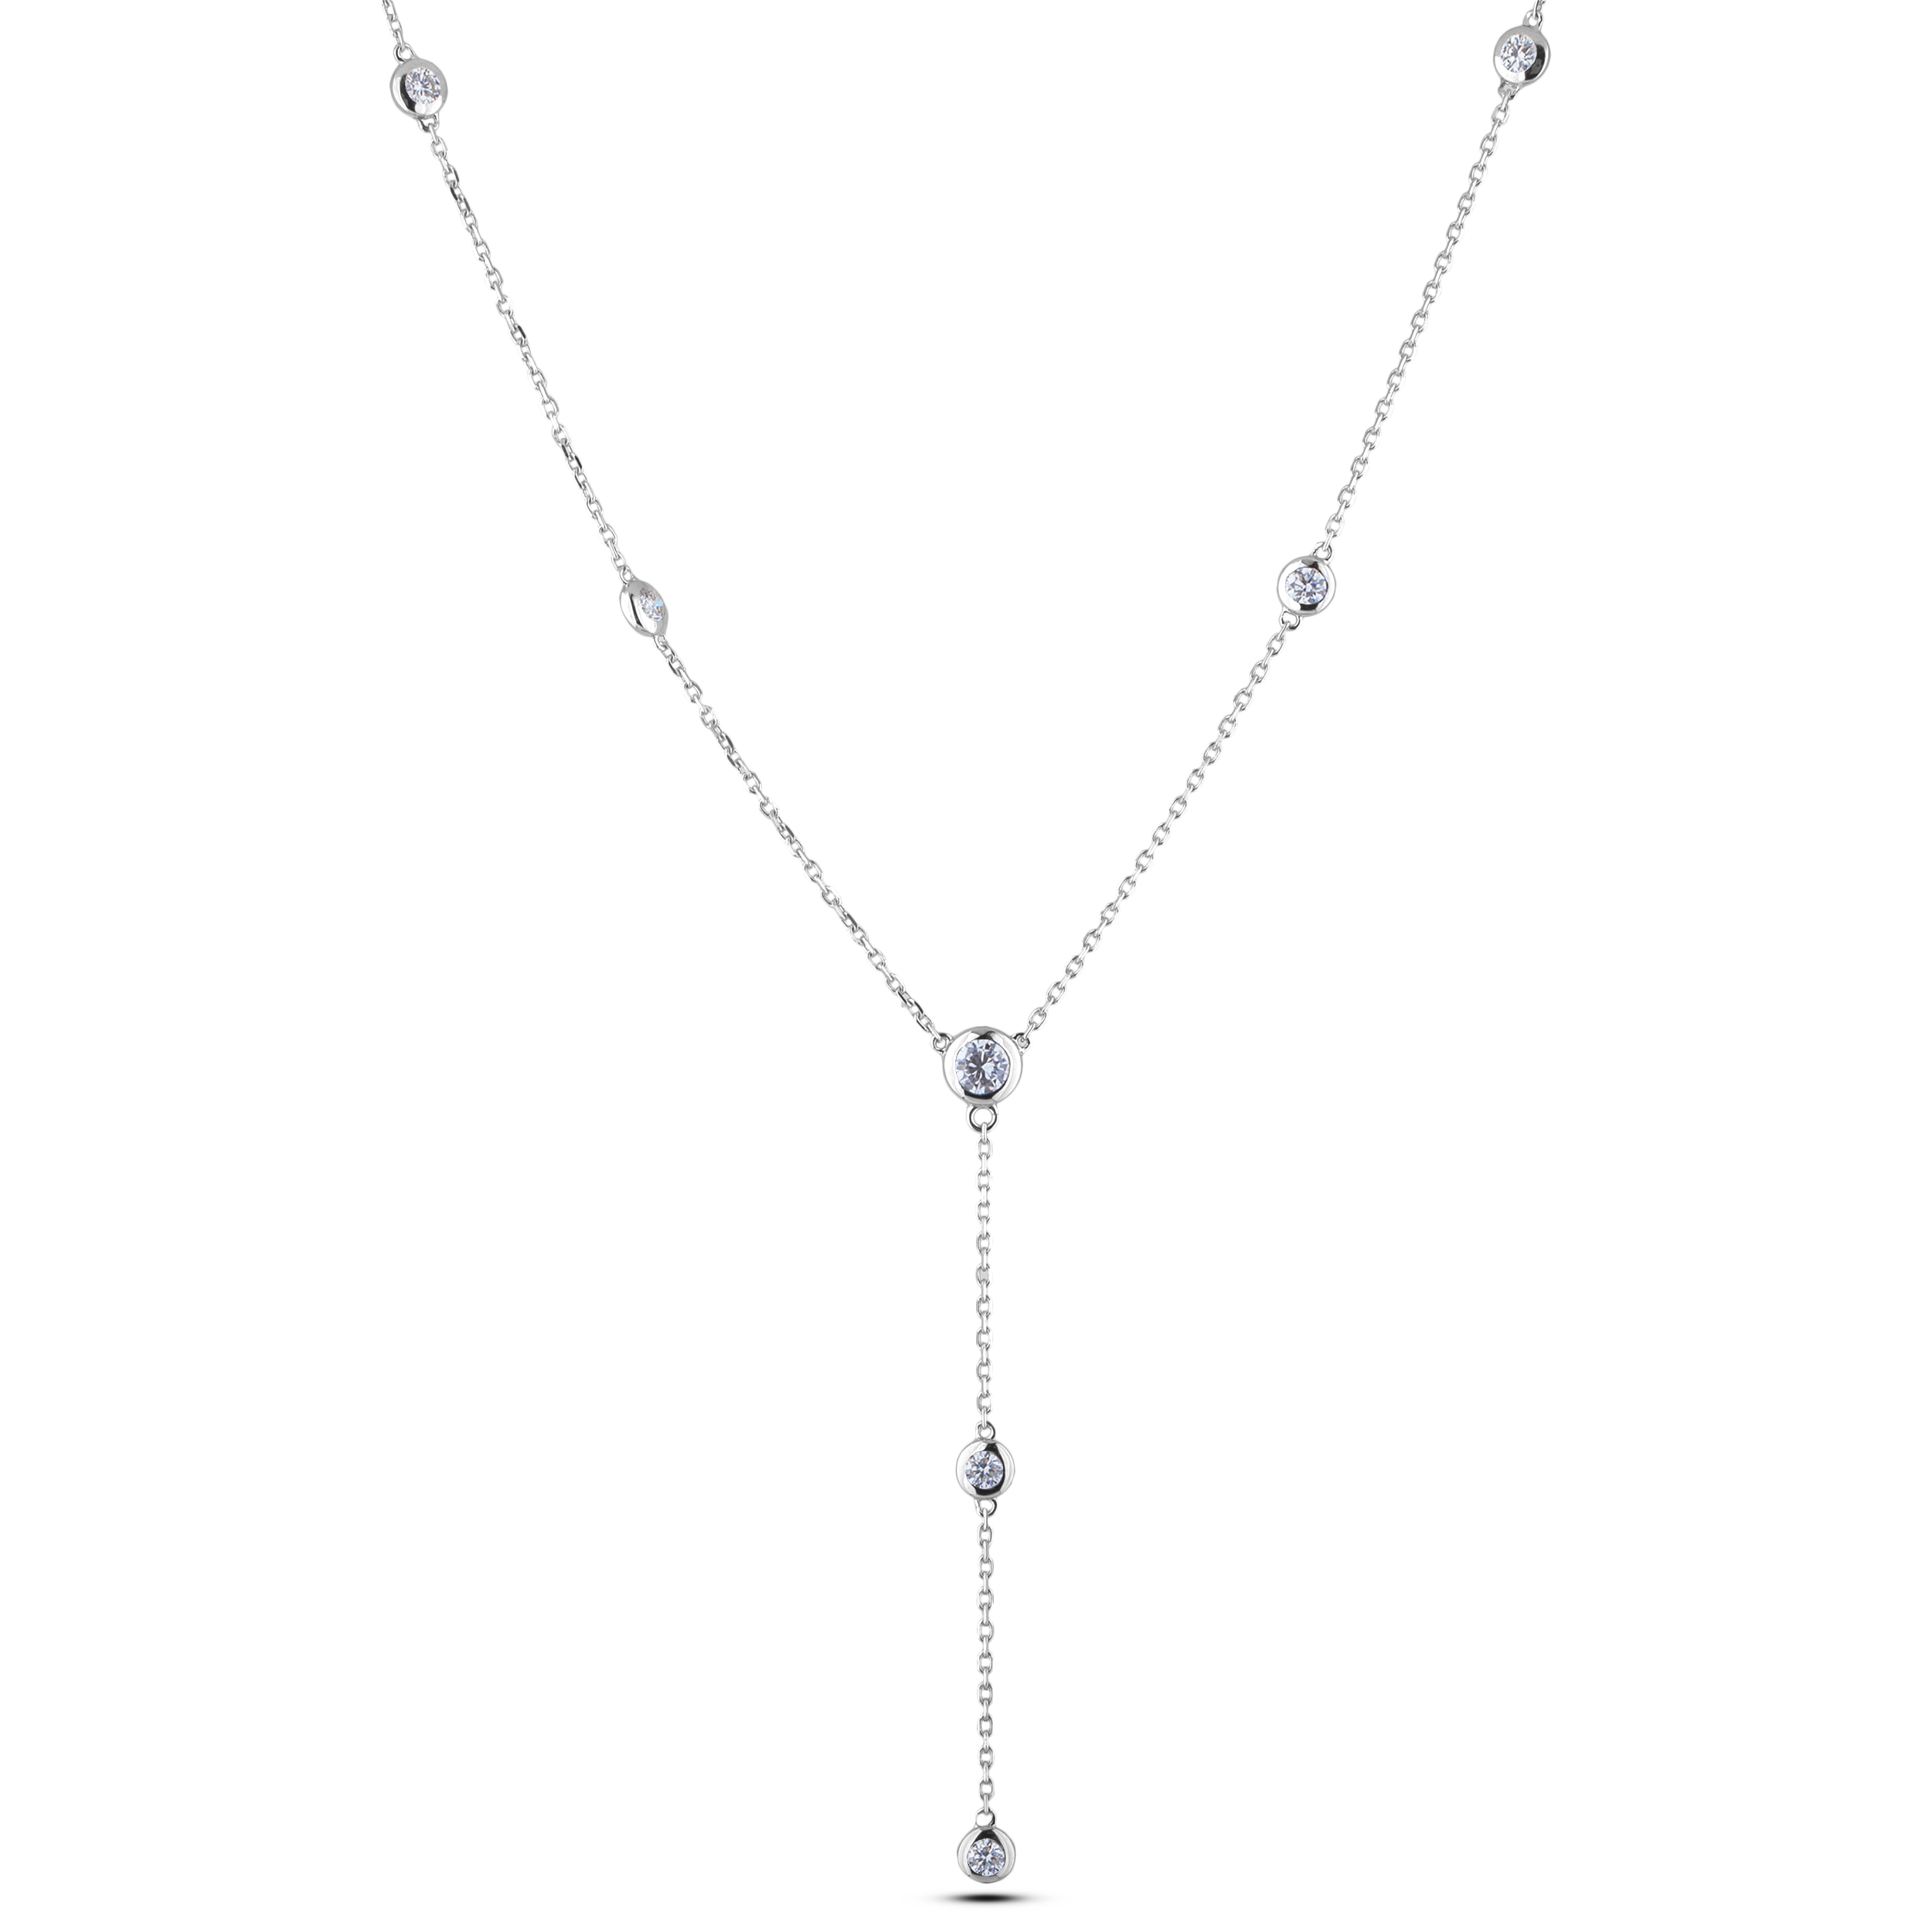 Diamond Necklaces JP-MC-074-2.0 (Pendants)